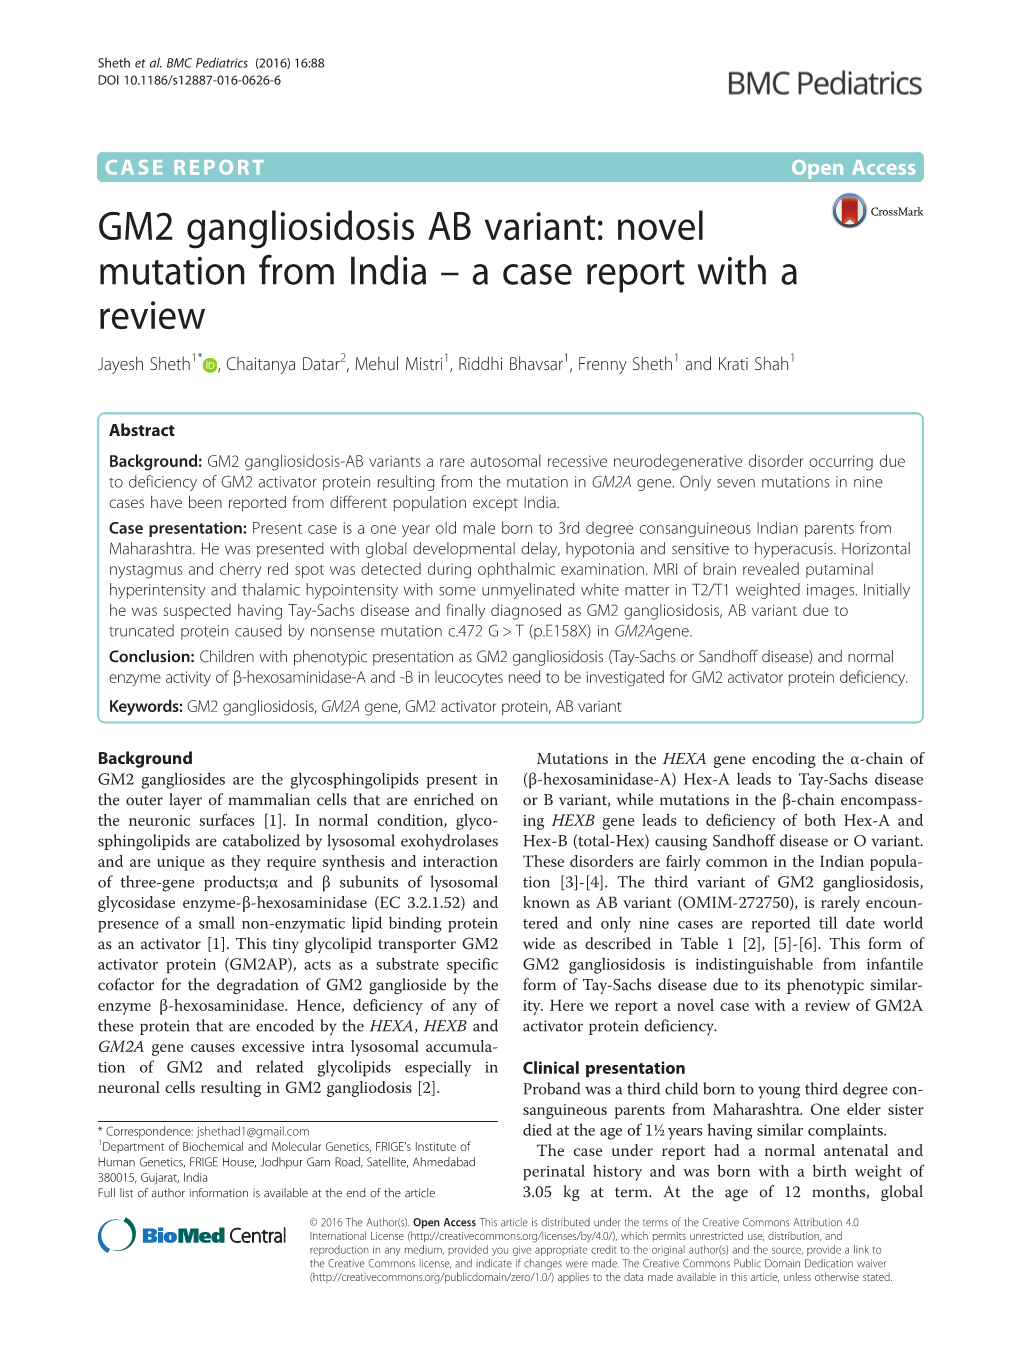 GM2 Gangliosidosis AB Variant